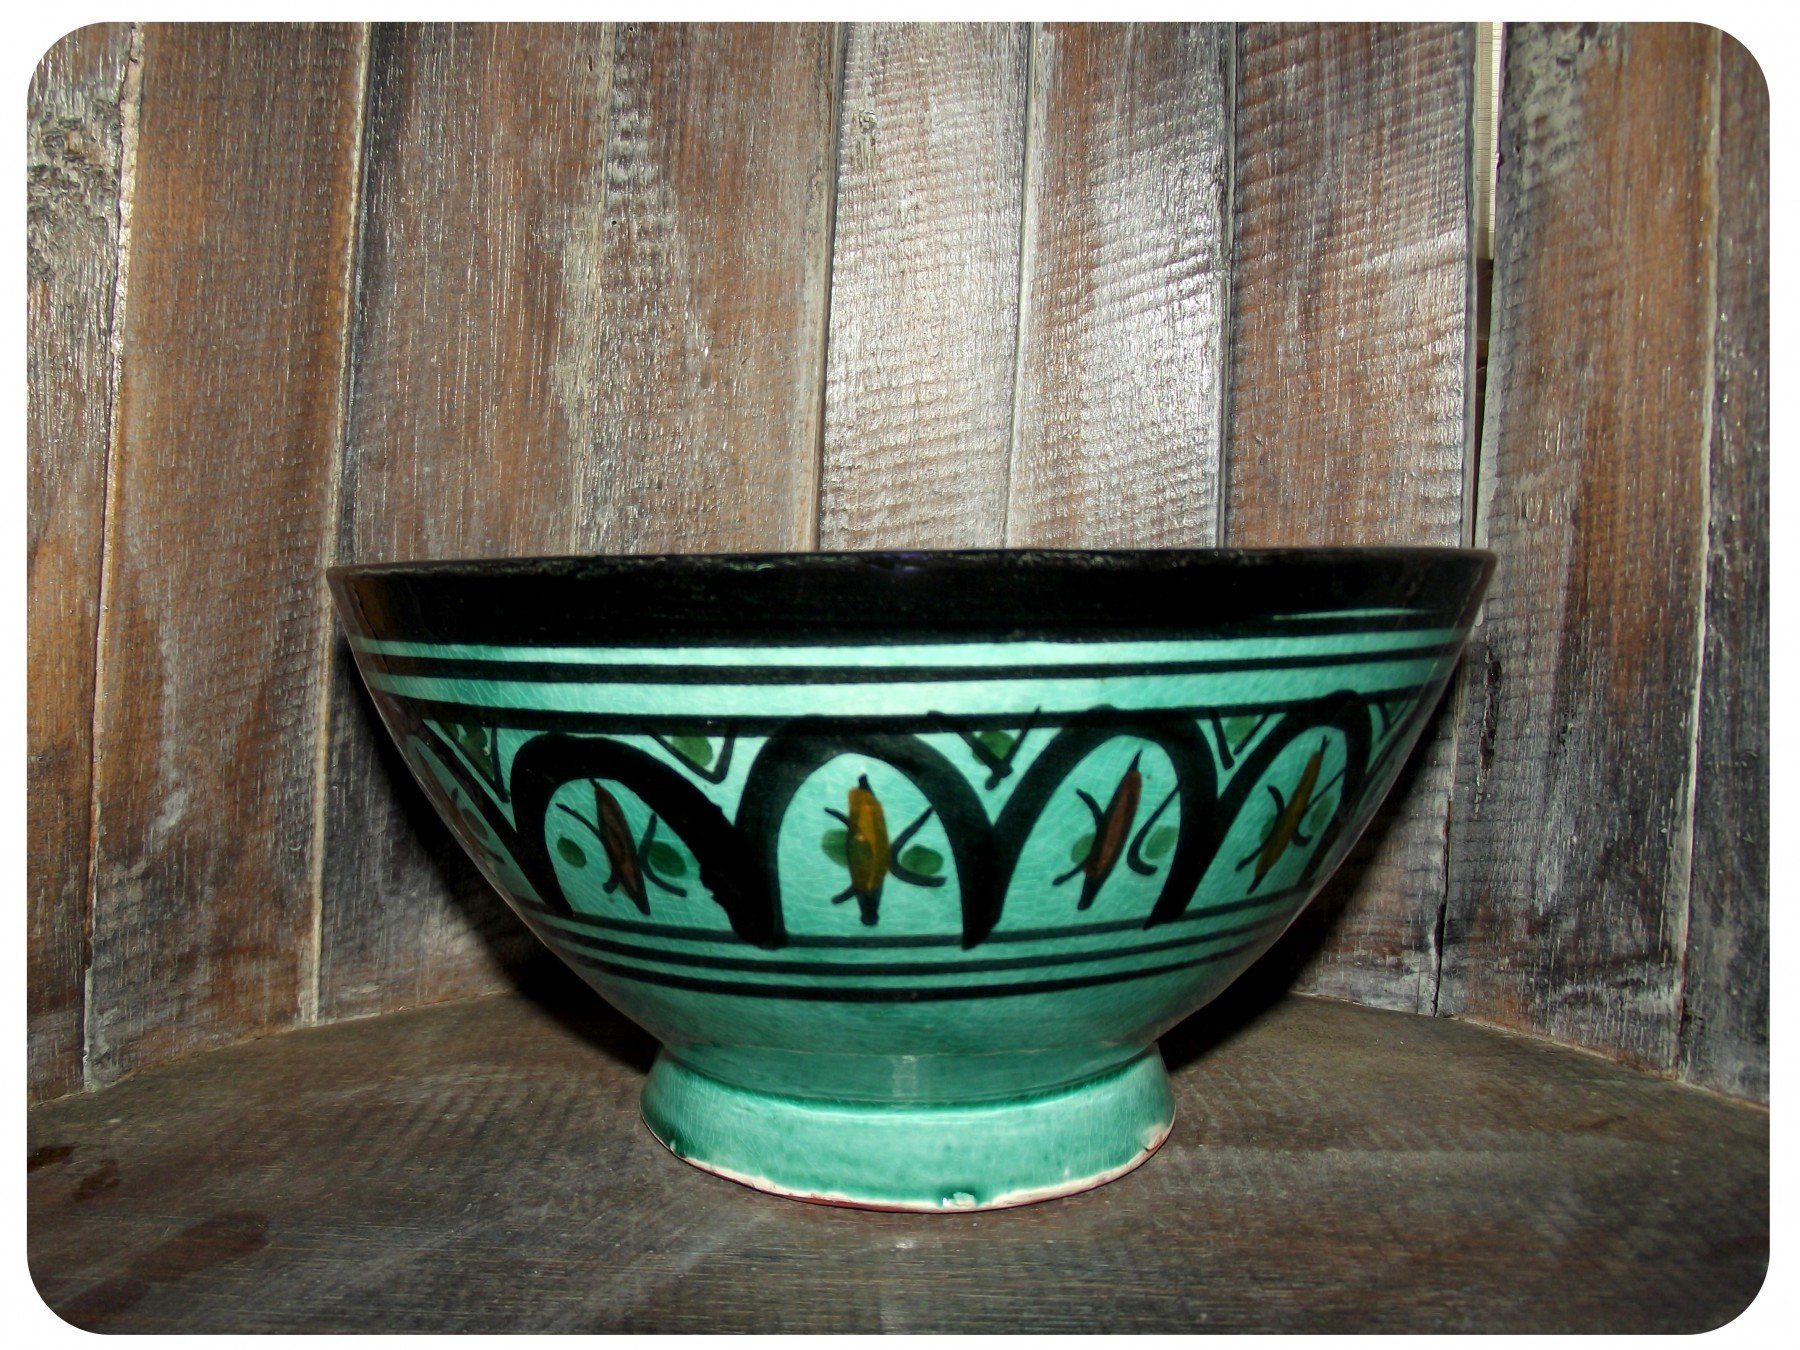 SIMANDRA marokkanische Orientalische Schüssel Grün (Mittel, 1-tlg), handarbeit Keramik, Keramikschüssel,